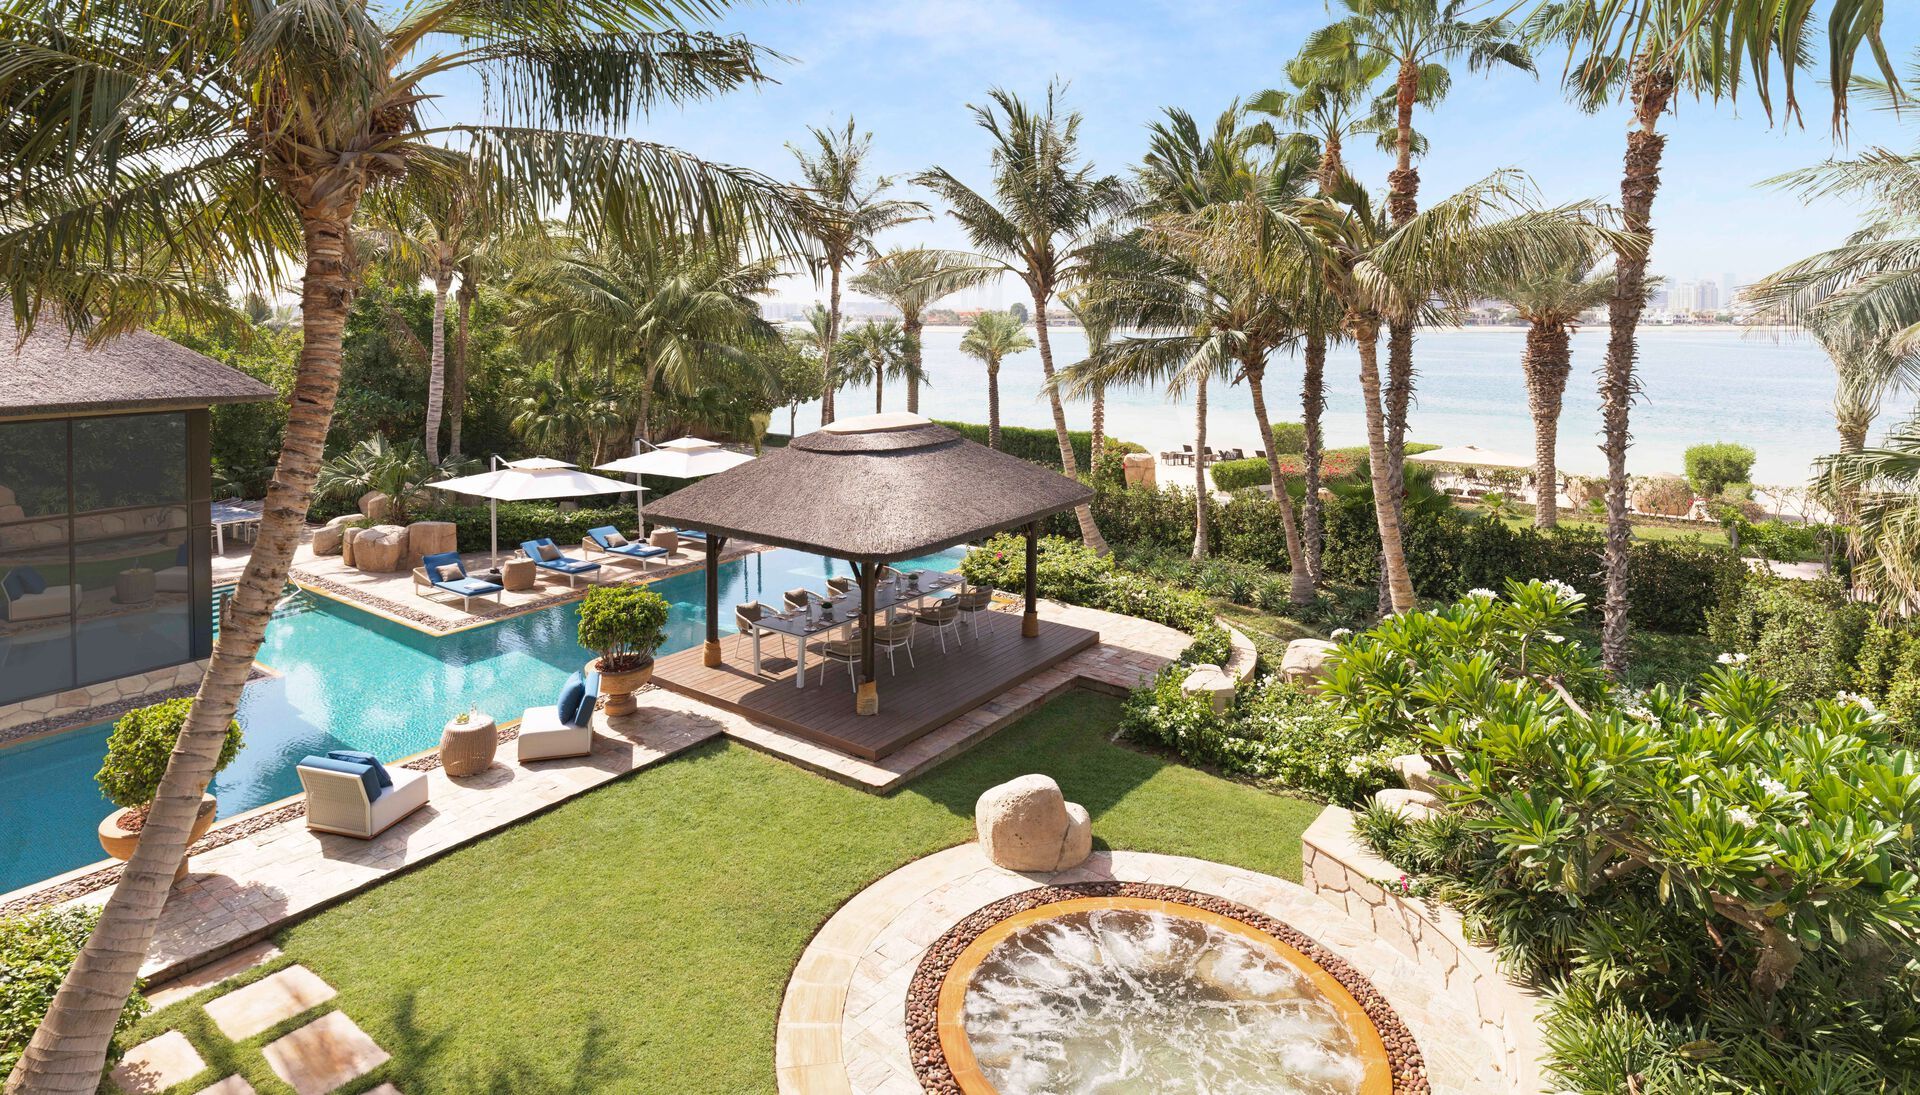 Emirats Arabes Unis - Dubaï - Hôtel Sofitel Dubai The Palm 5*